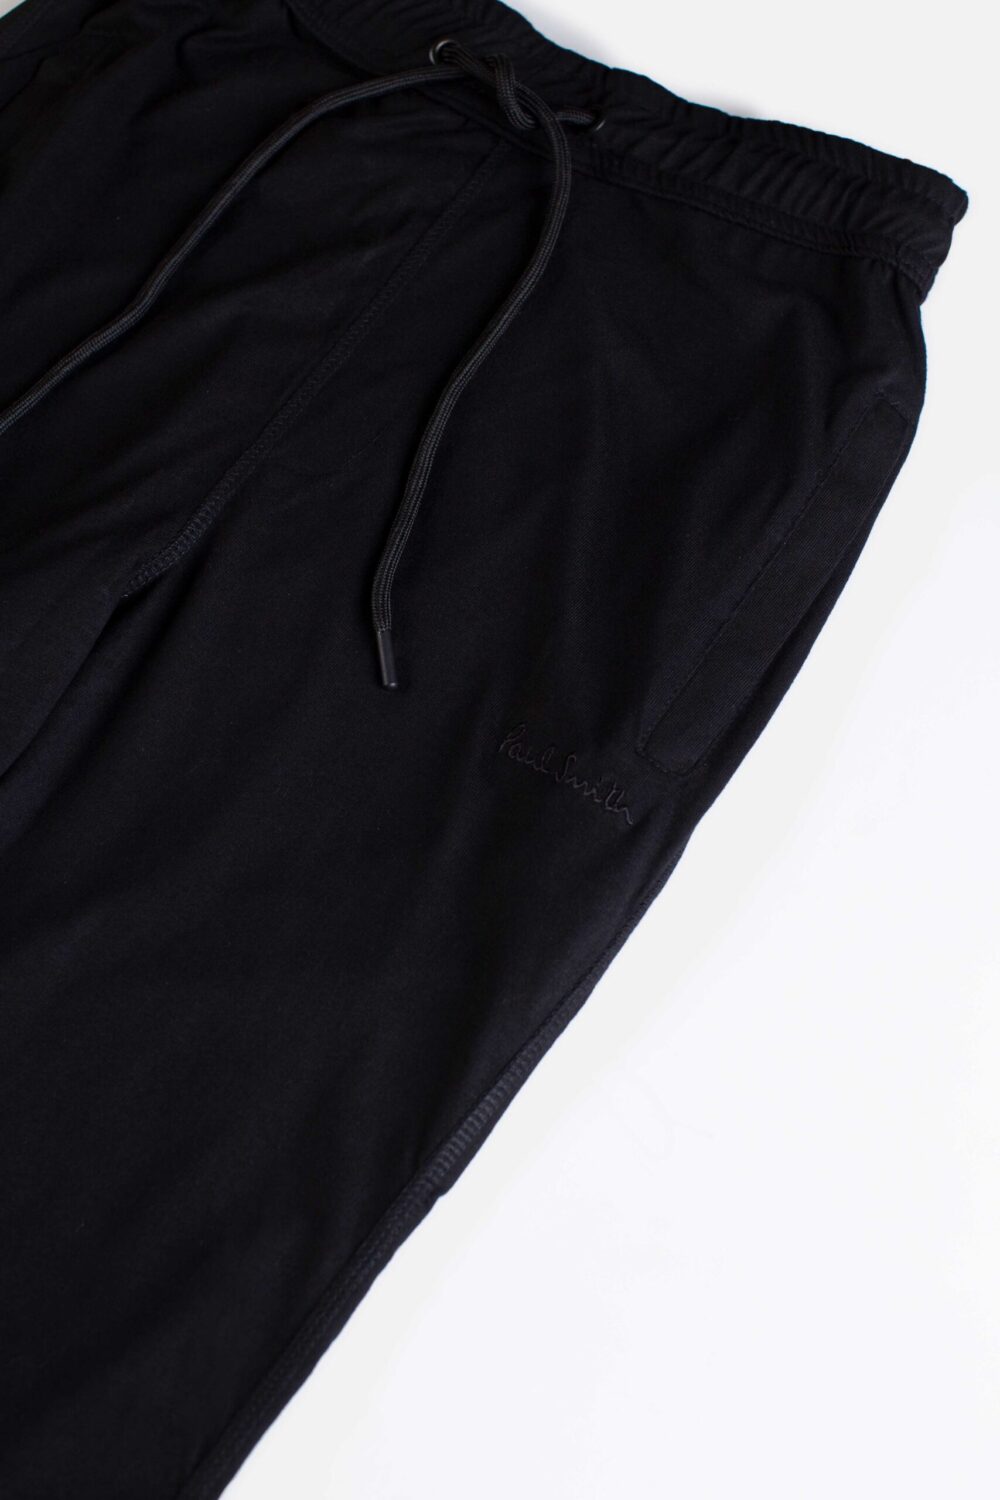 Paul Smith Premium Cotton Trouser – Black